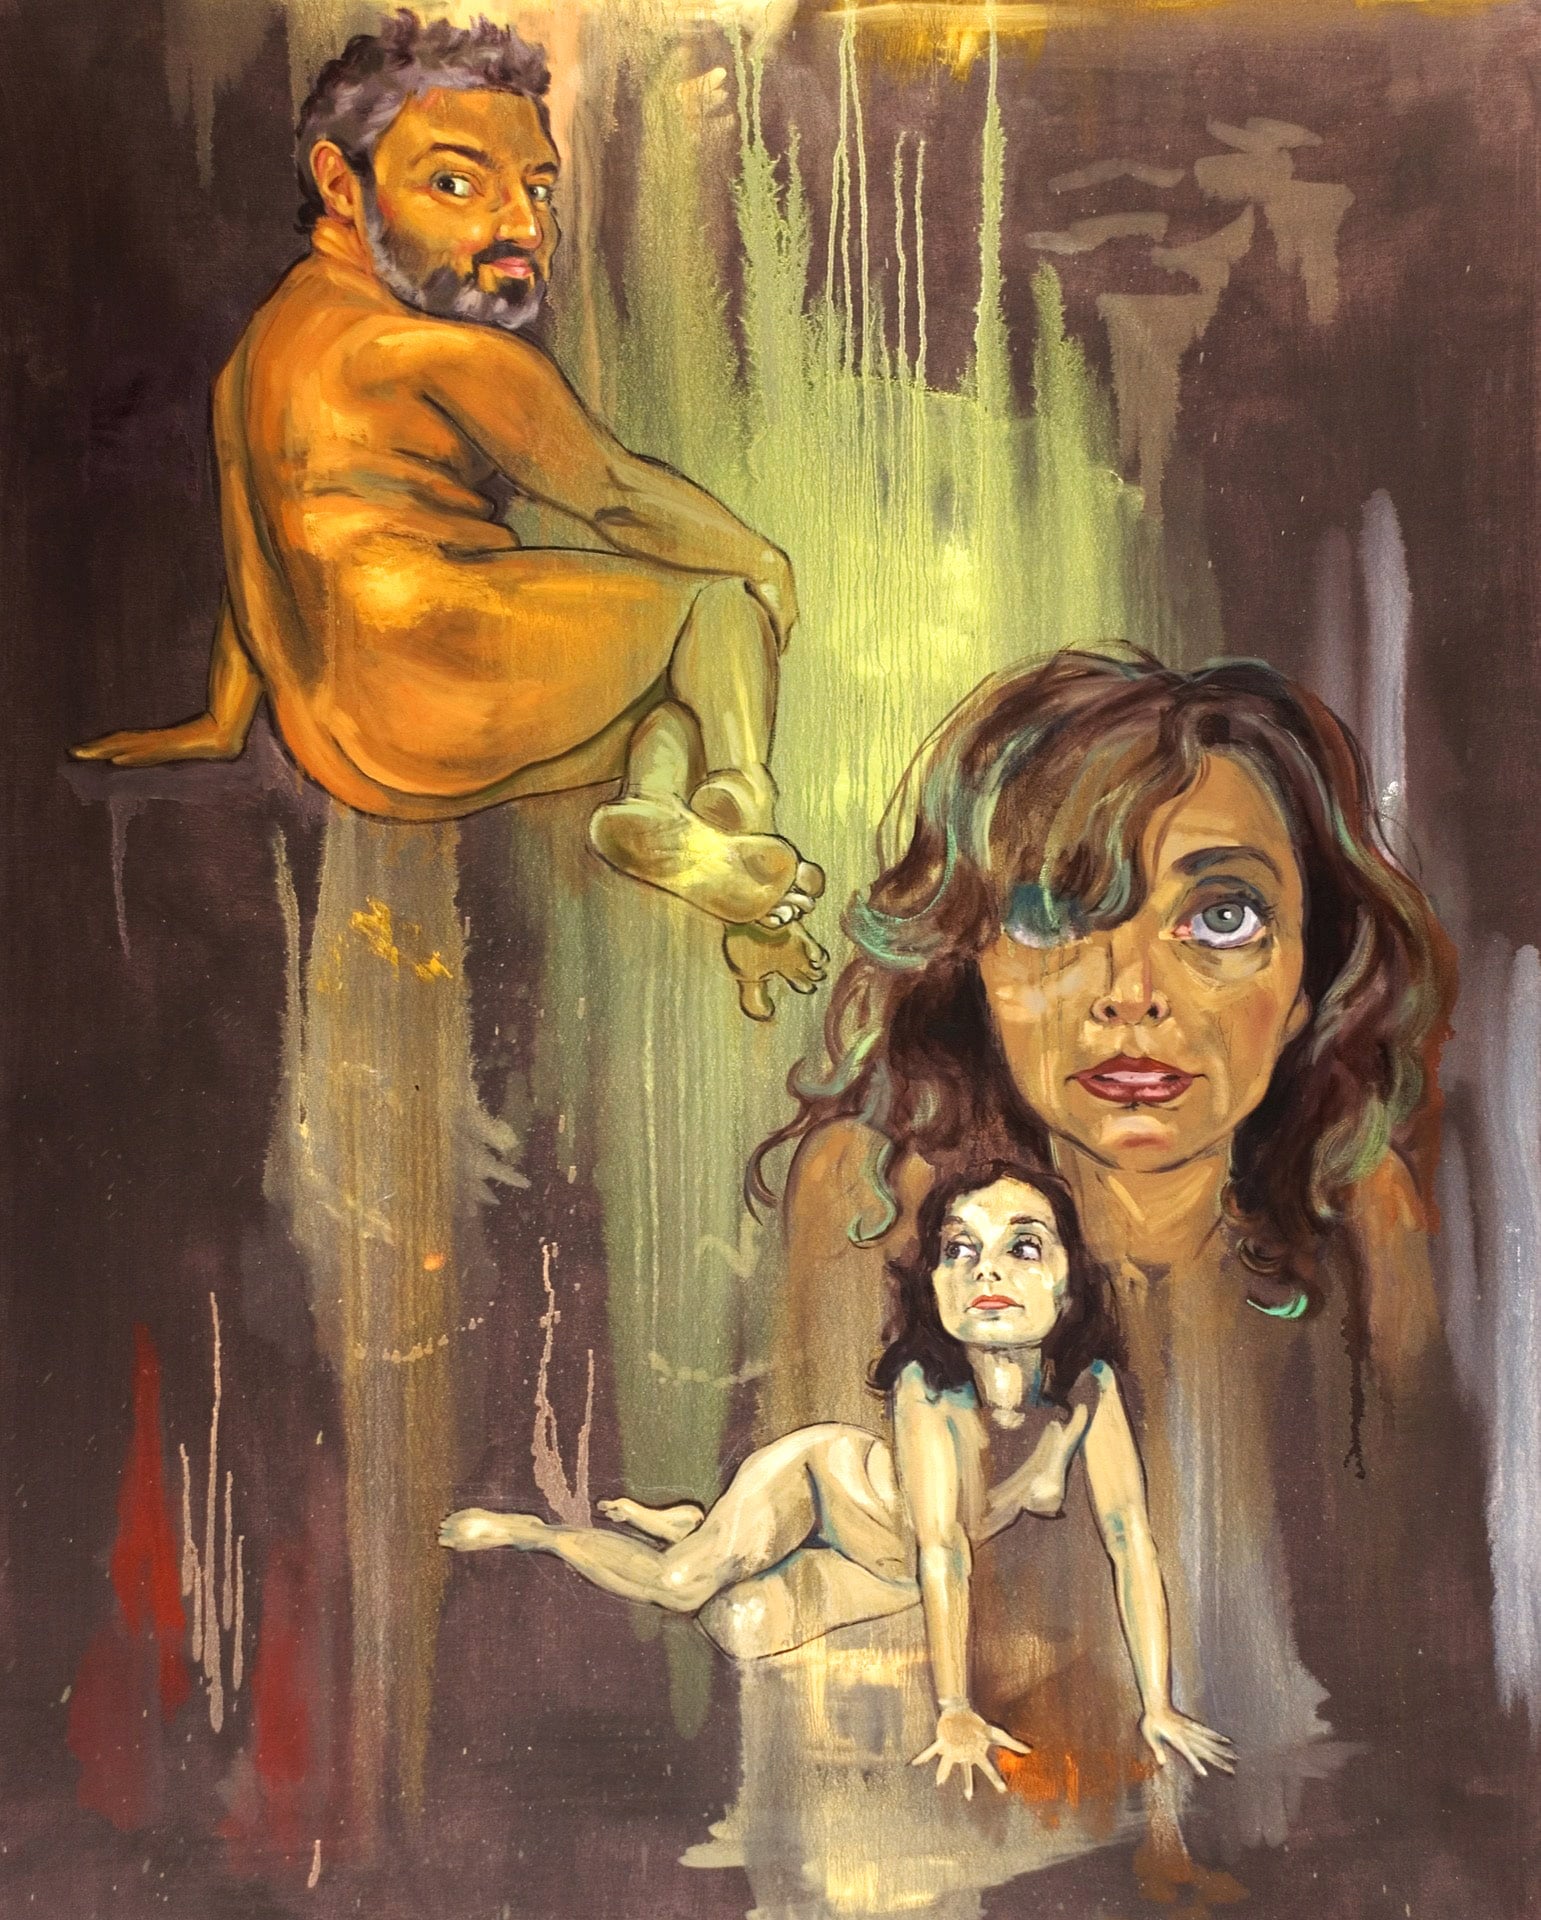 "Antonio with Double Amy", oil on canvas, 48" x 60", 2007.